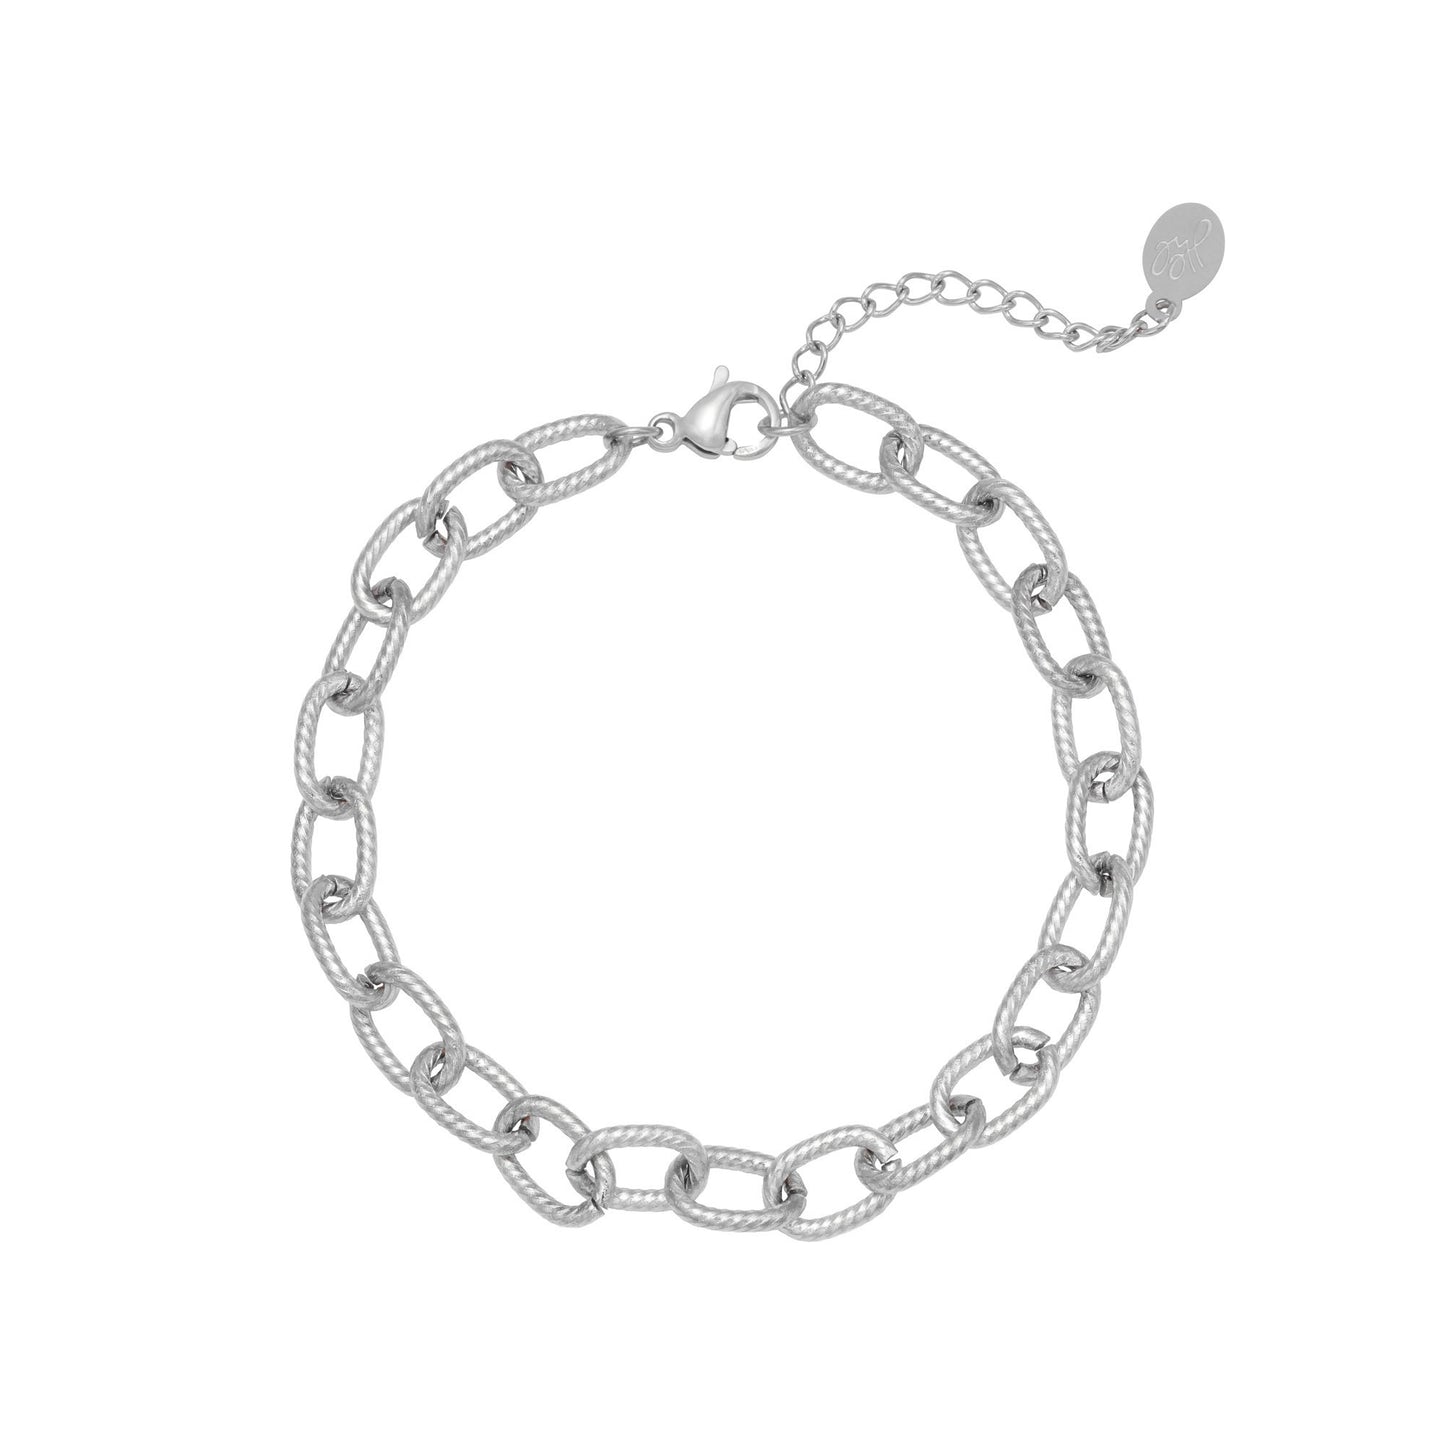 Chisled Chain Bracelet Silver